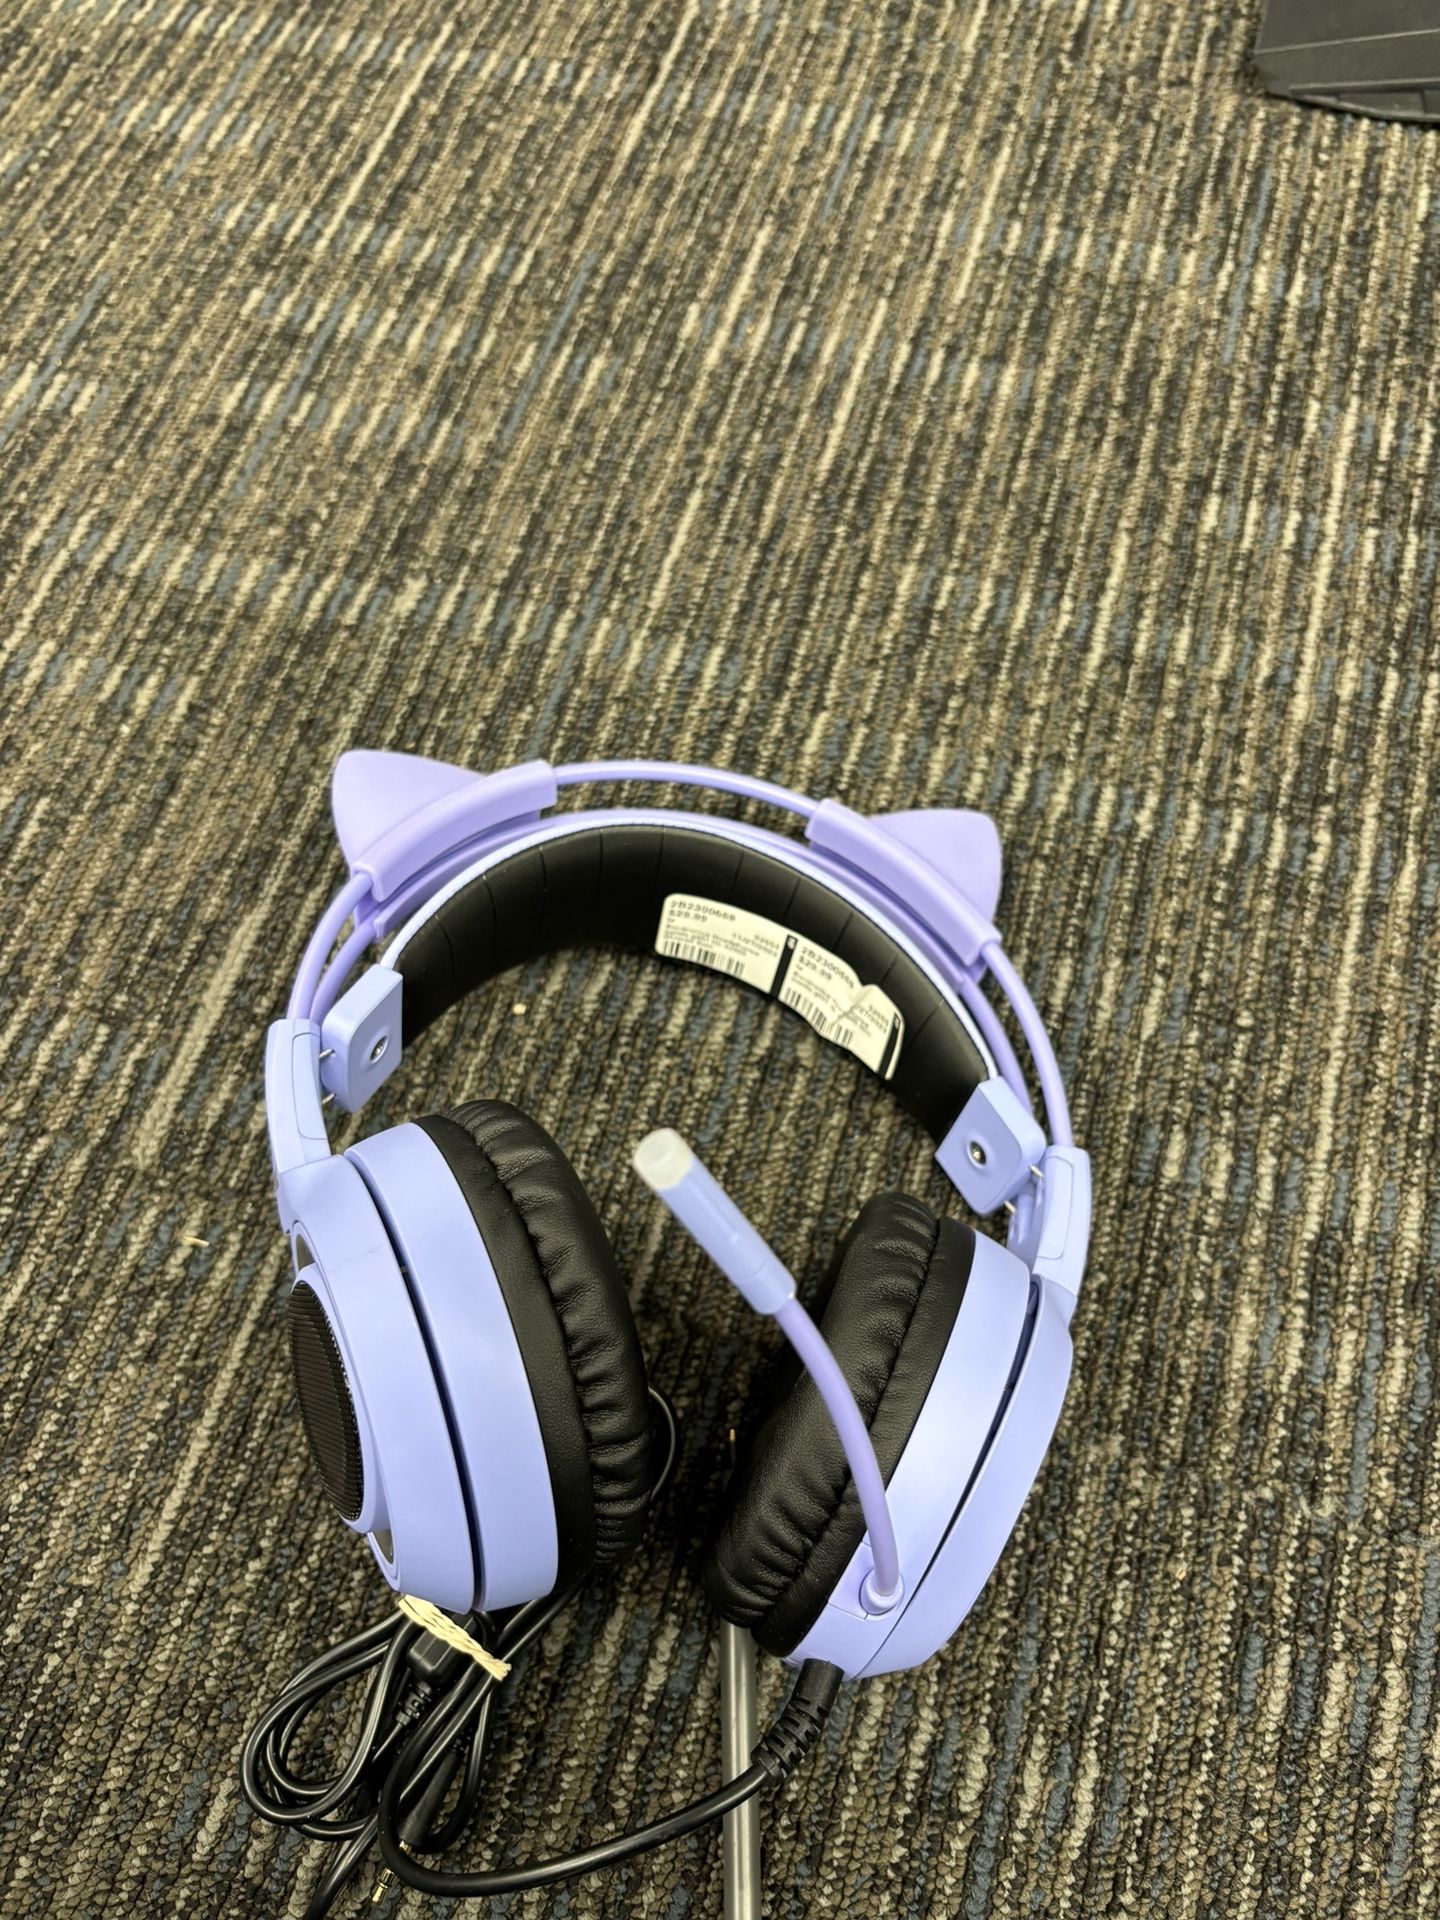 Stincoo Somic G951s gaming cat ear headphones